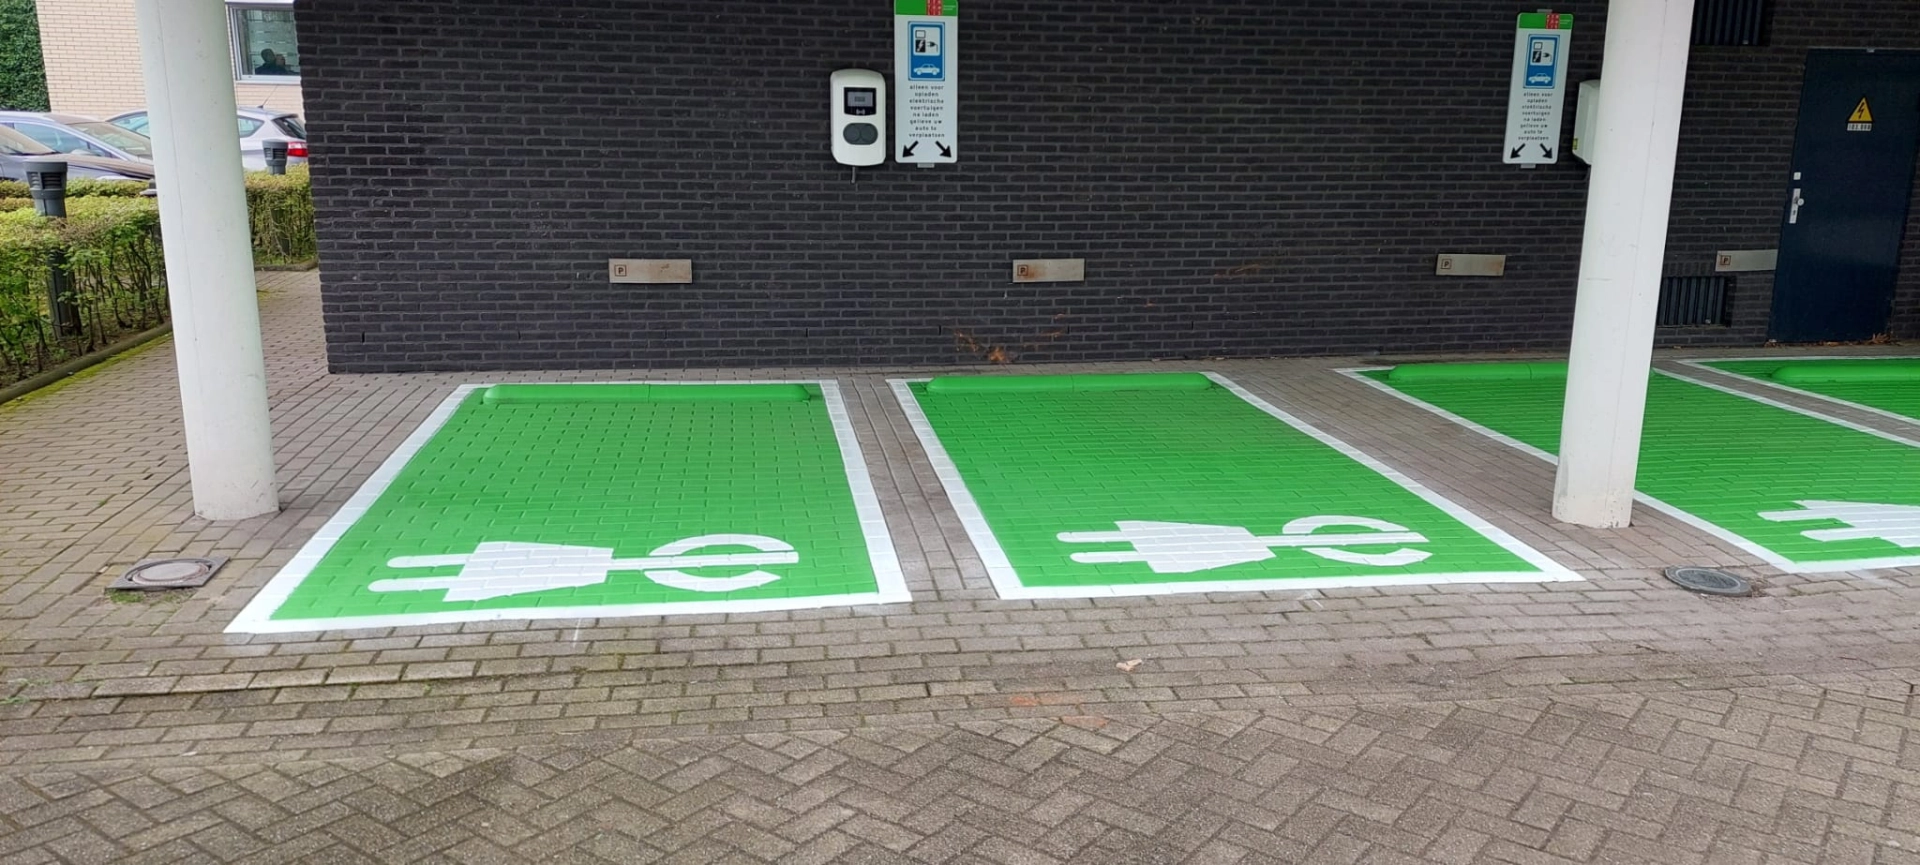 Parkeerplaats auto oplaadpunt - parkeervak-wegmarkering-groen-symbool-oplaadpunt-wegenverf